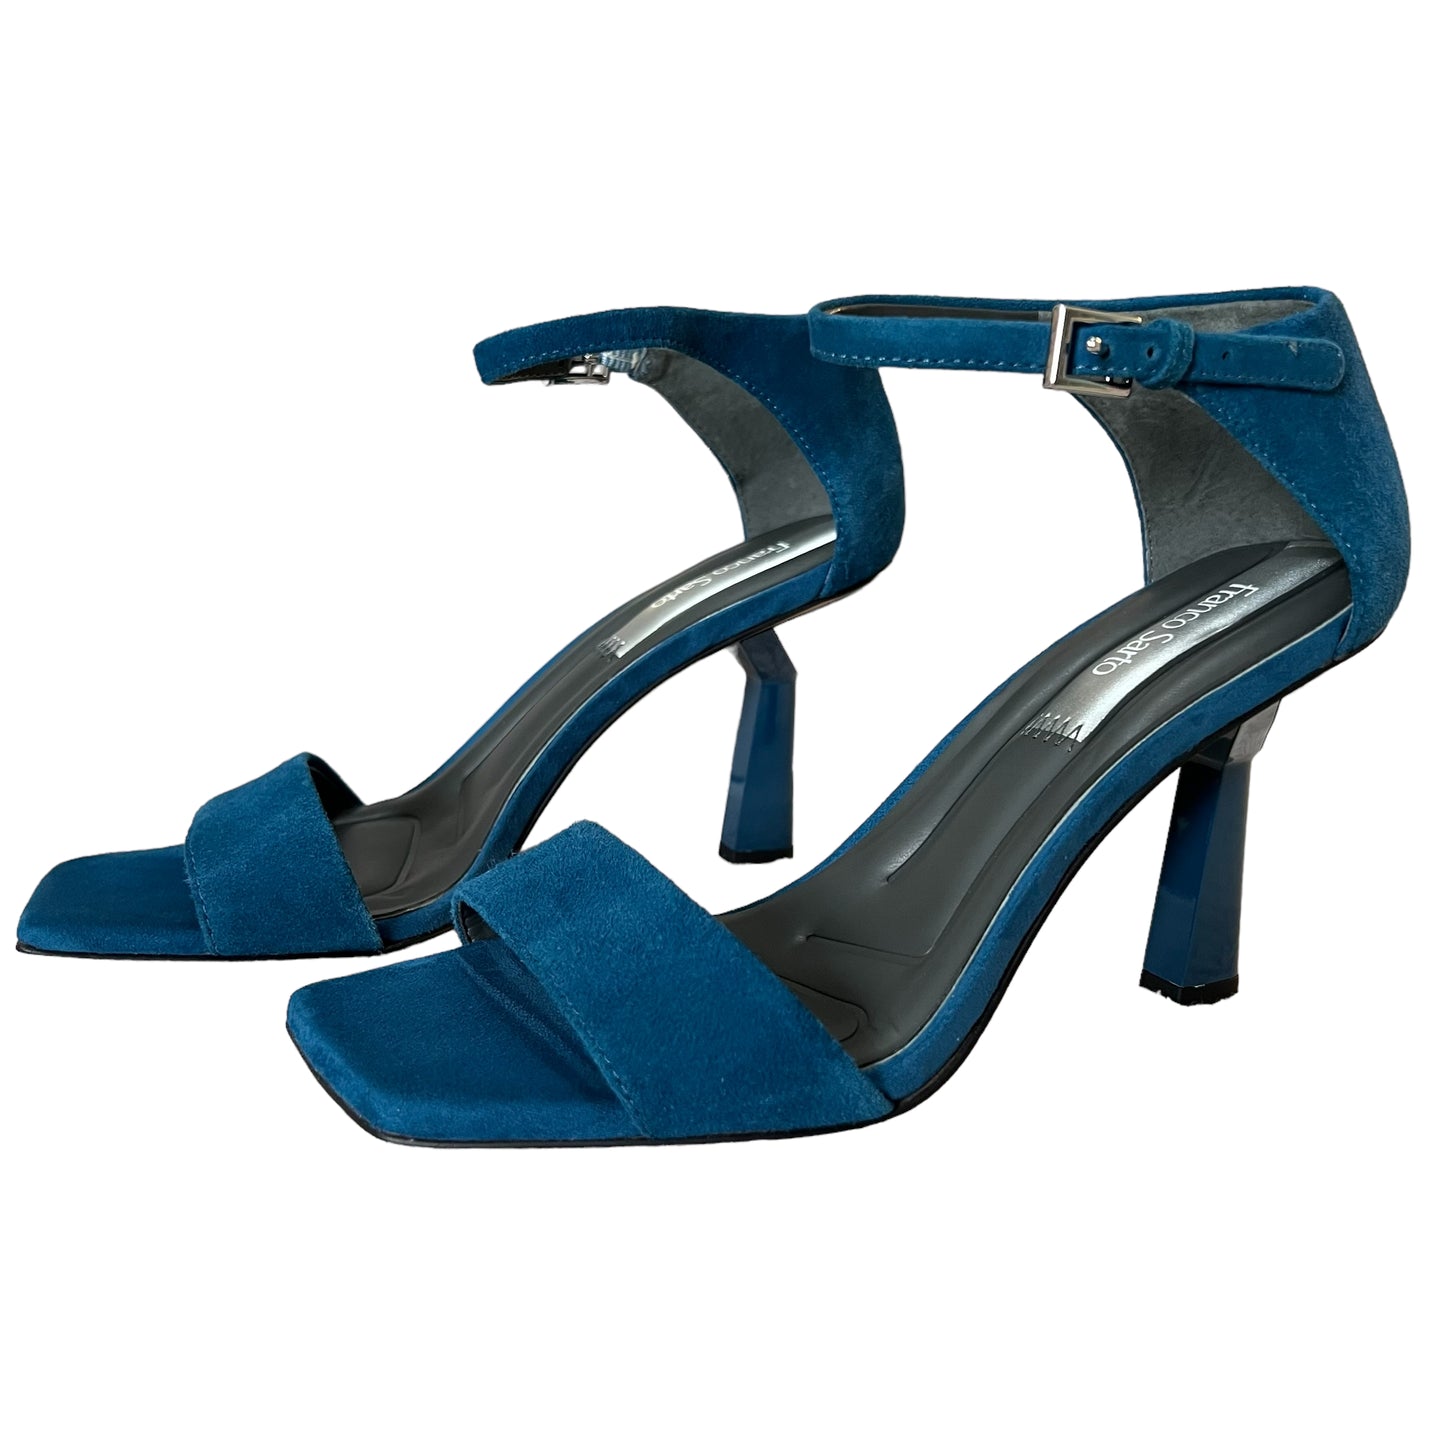 Franco Sarto Teal Blue Ankle Strap Sandal Size 7